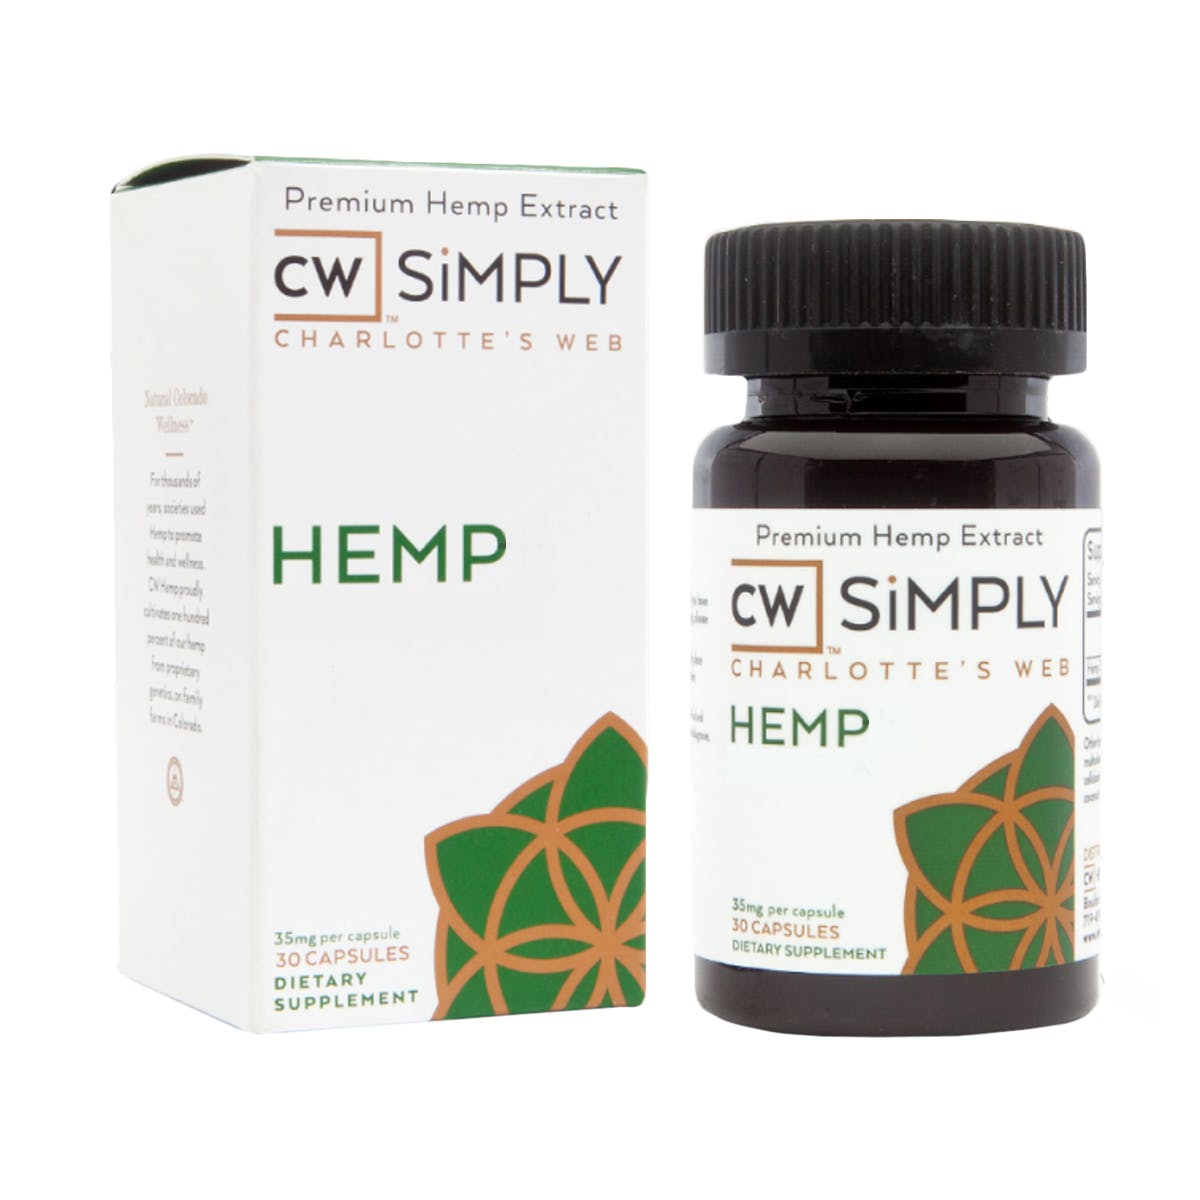 marijuana-dispensaries-organic-alternatives-in-fort-collins-simply-hemp-capsules